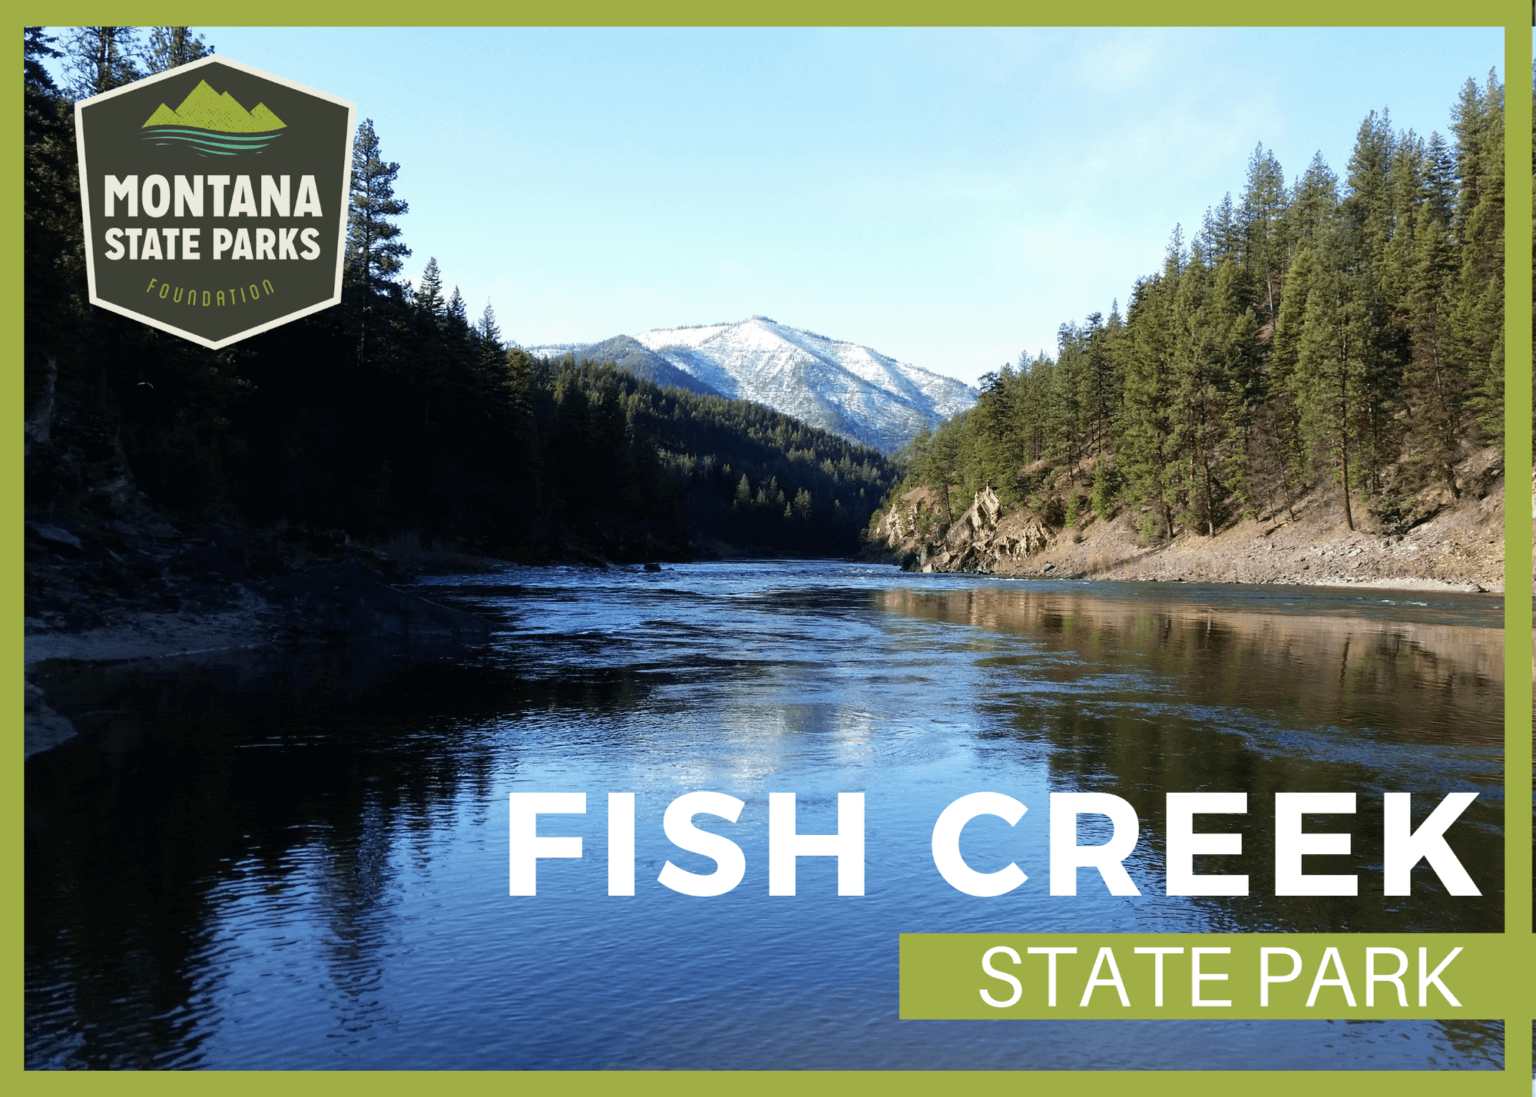 Fish Creek State Park2 1536x1097 